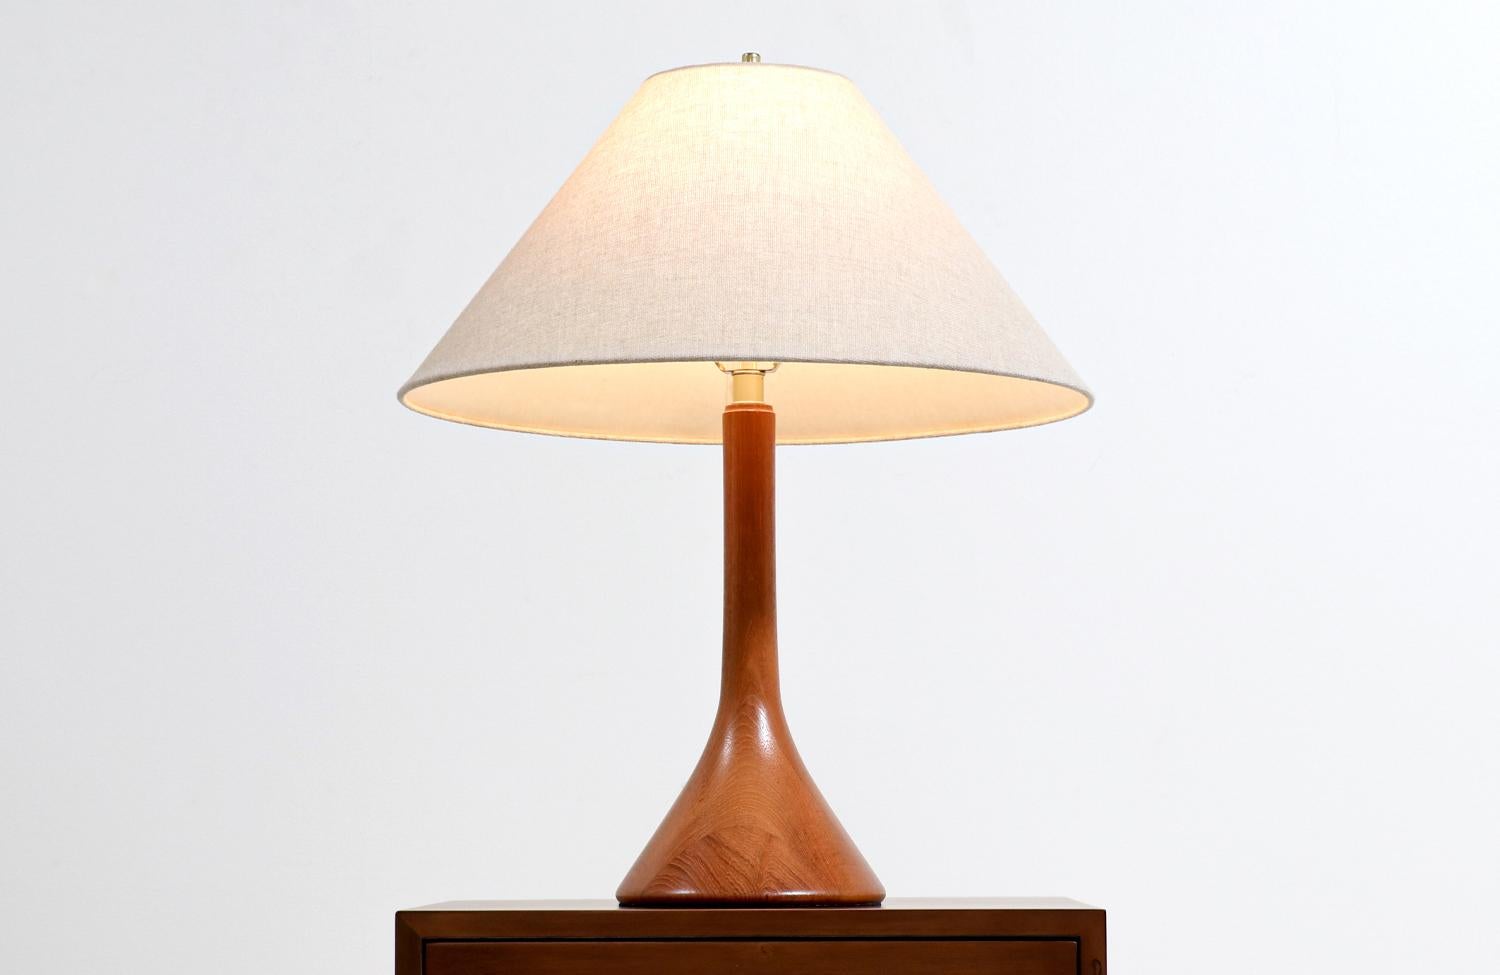 Danish modern sculpted teak table lamp.

Dimensions
27in H x 8in W x 8in D 
Lamp Shade: 11in H x 22in W.
 